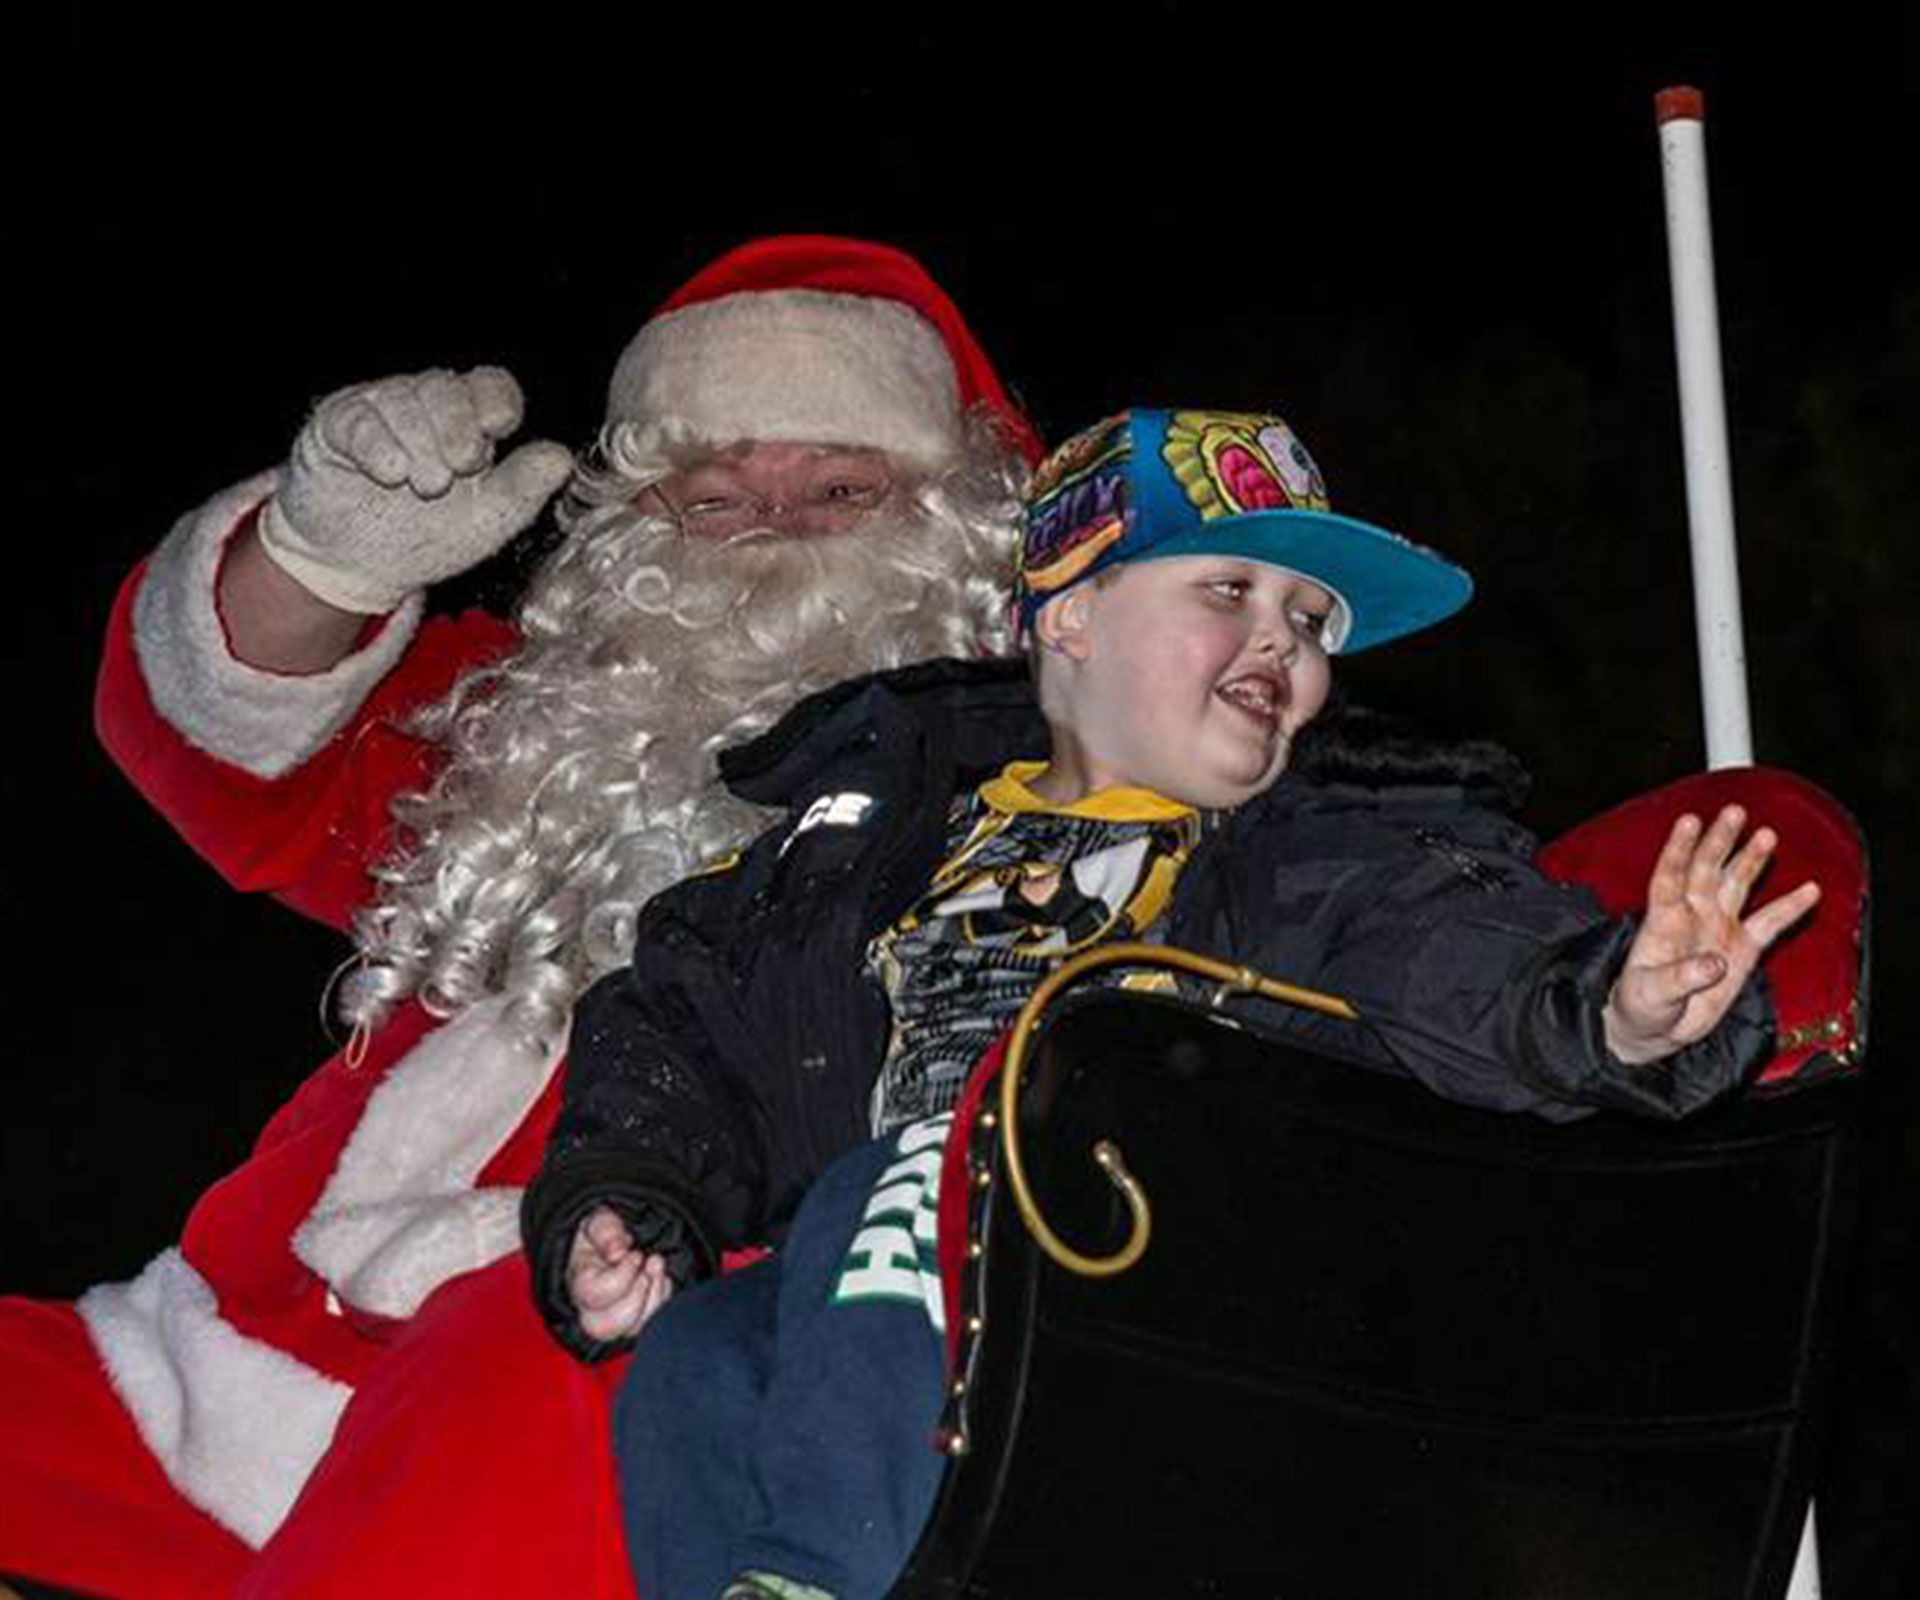 Town celebrates Christmas early for terminally ill boy